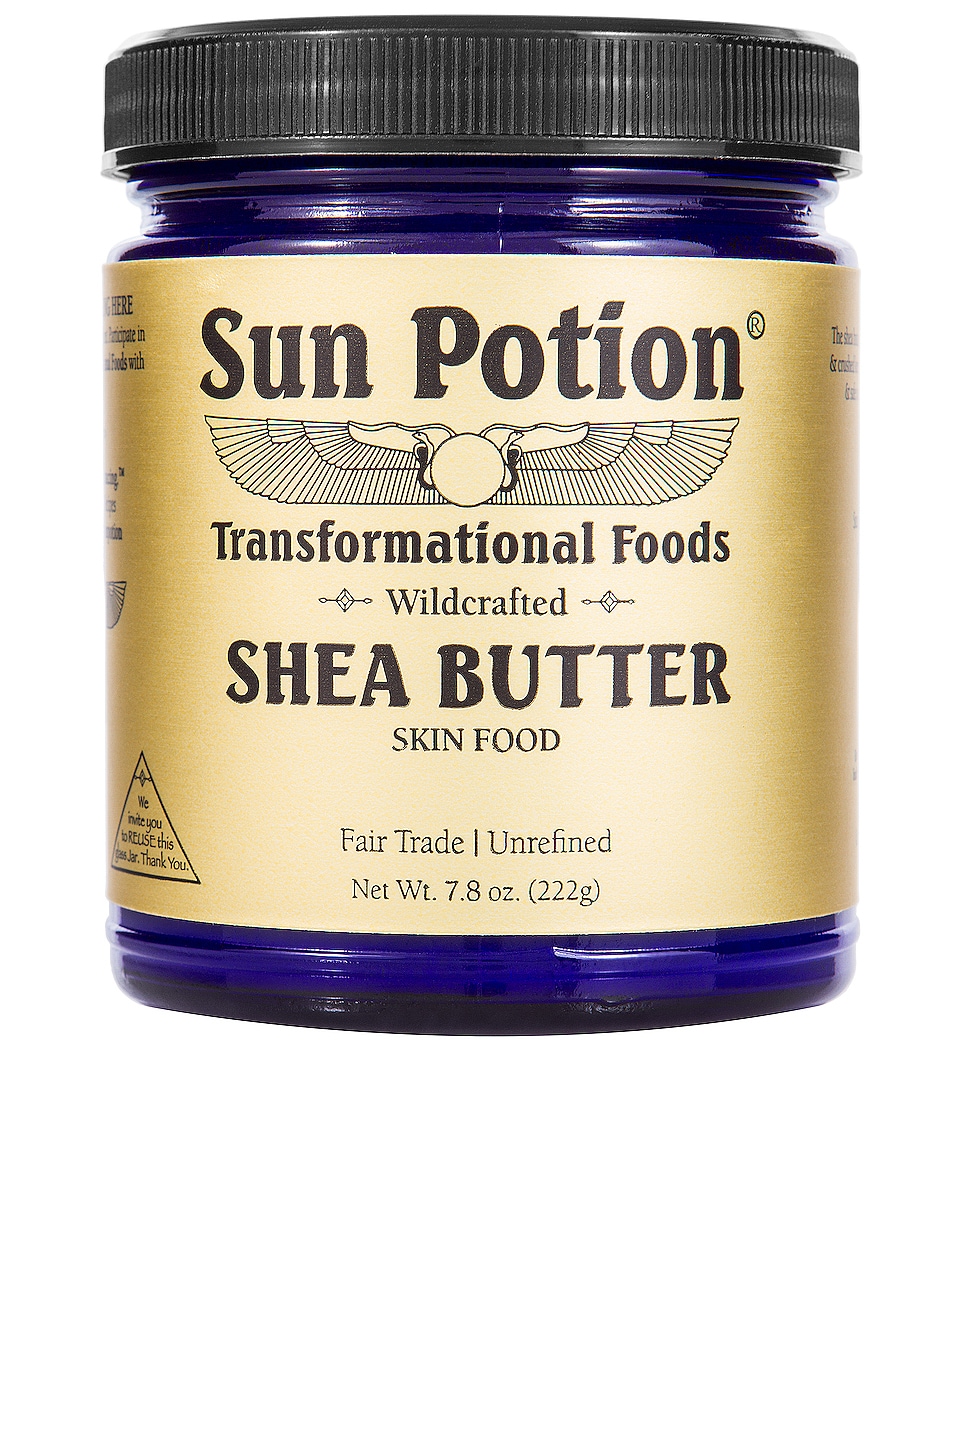 Sun Potion Shea Butter Skin Food In N,a